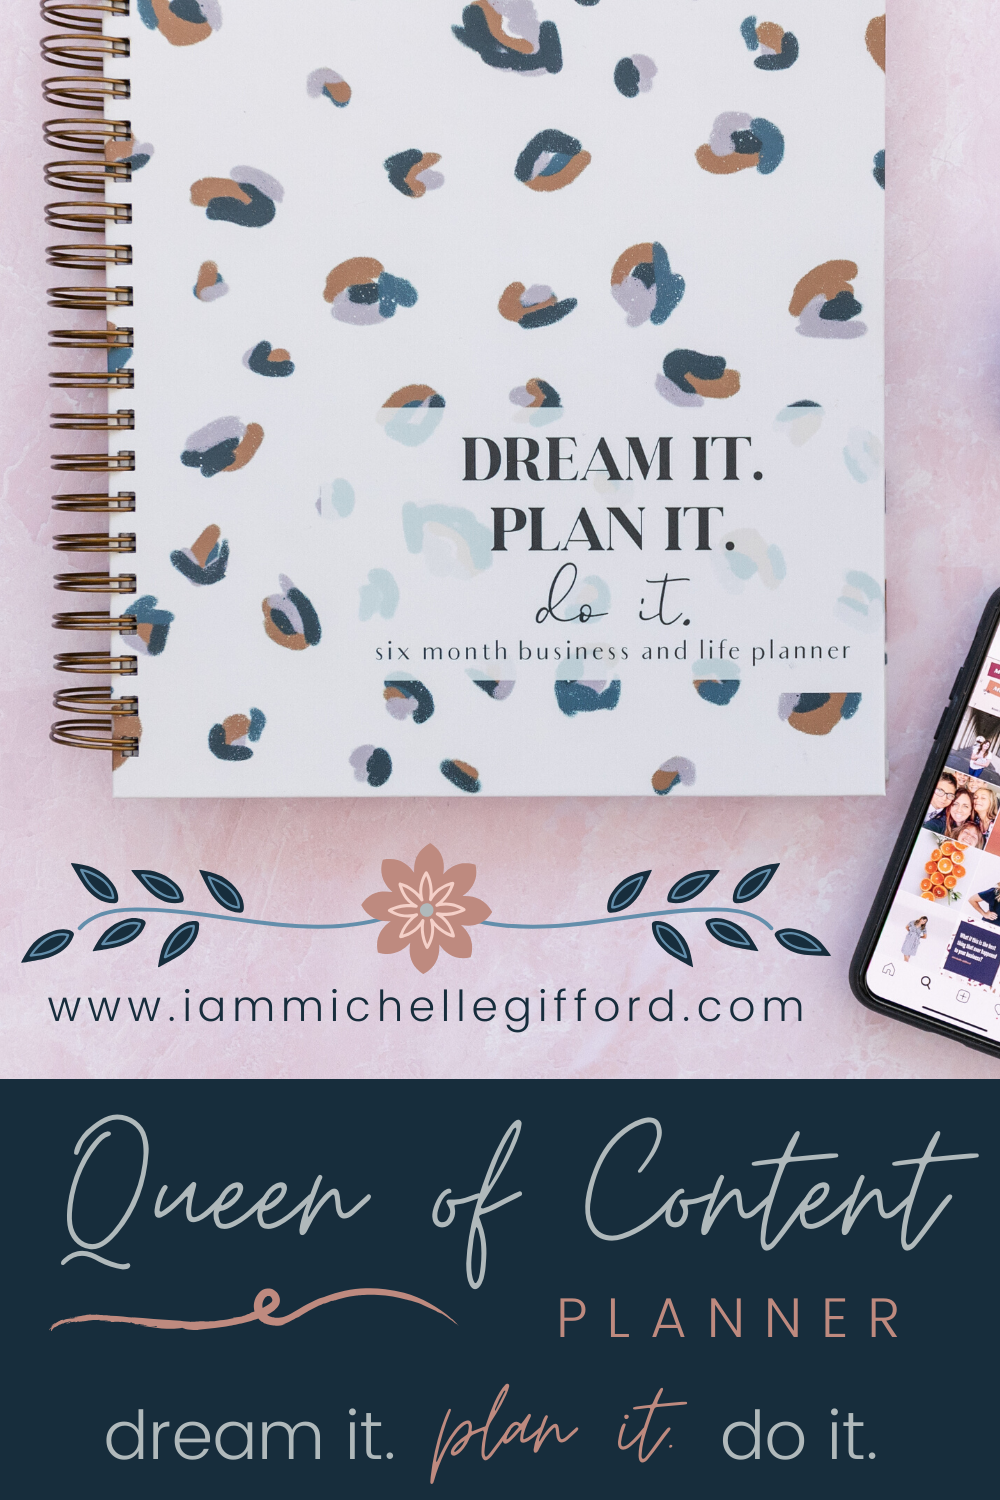 Queen of Content Planner Dream It Plan It Do It www.iammichellegifford.com